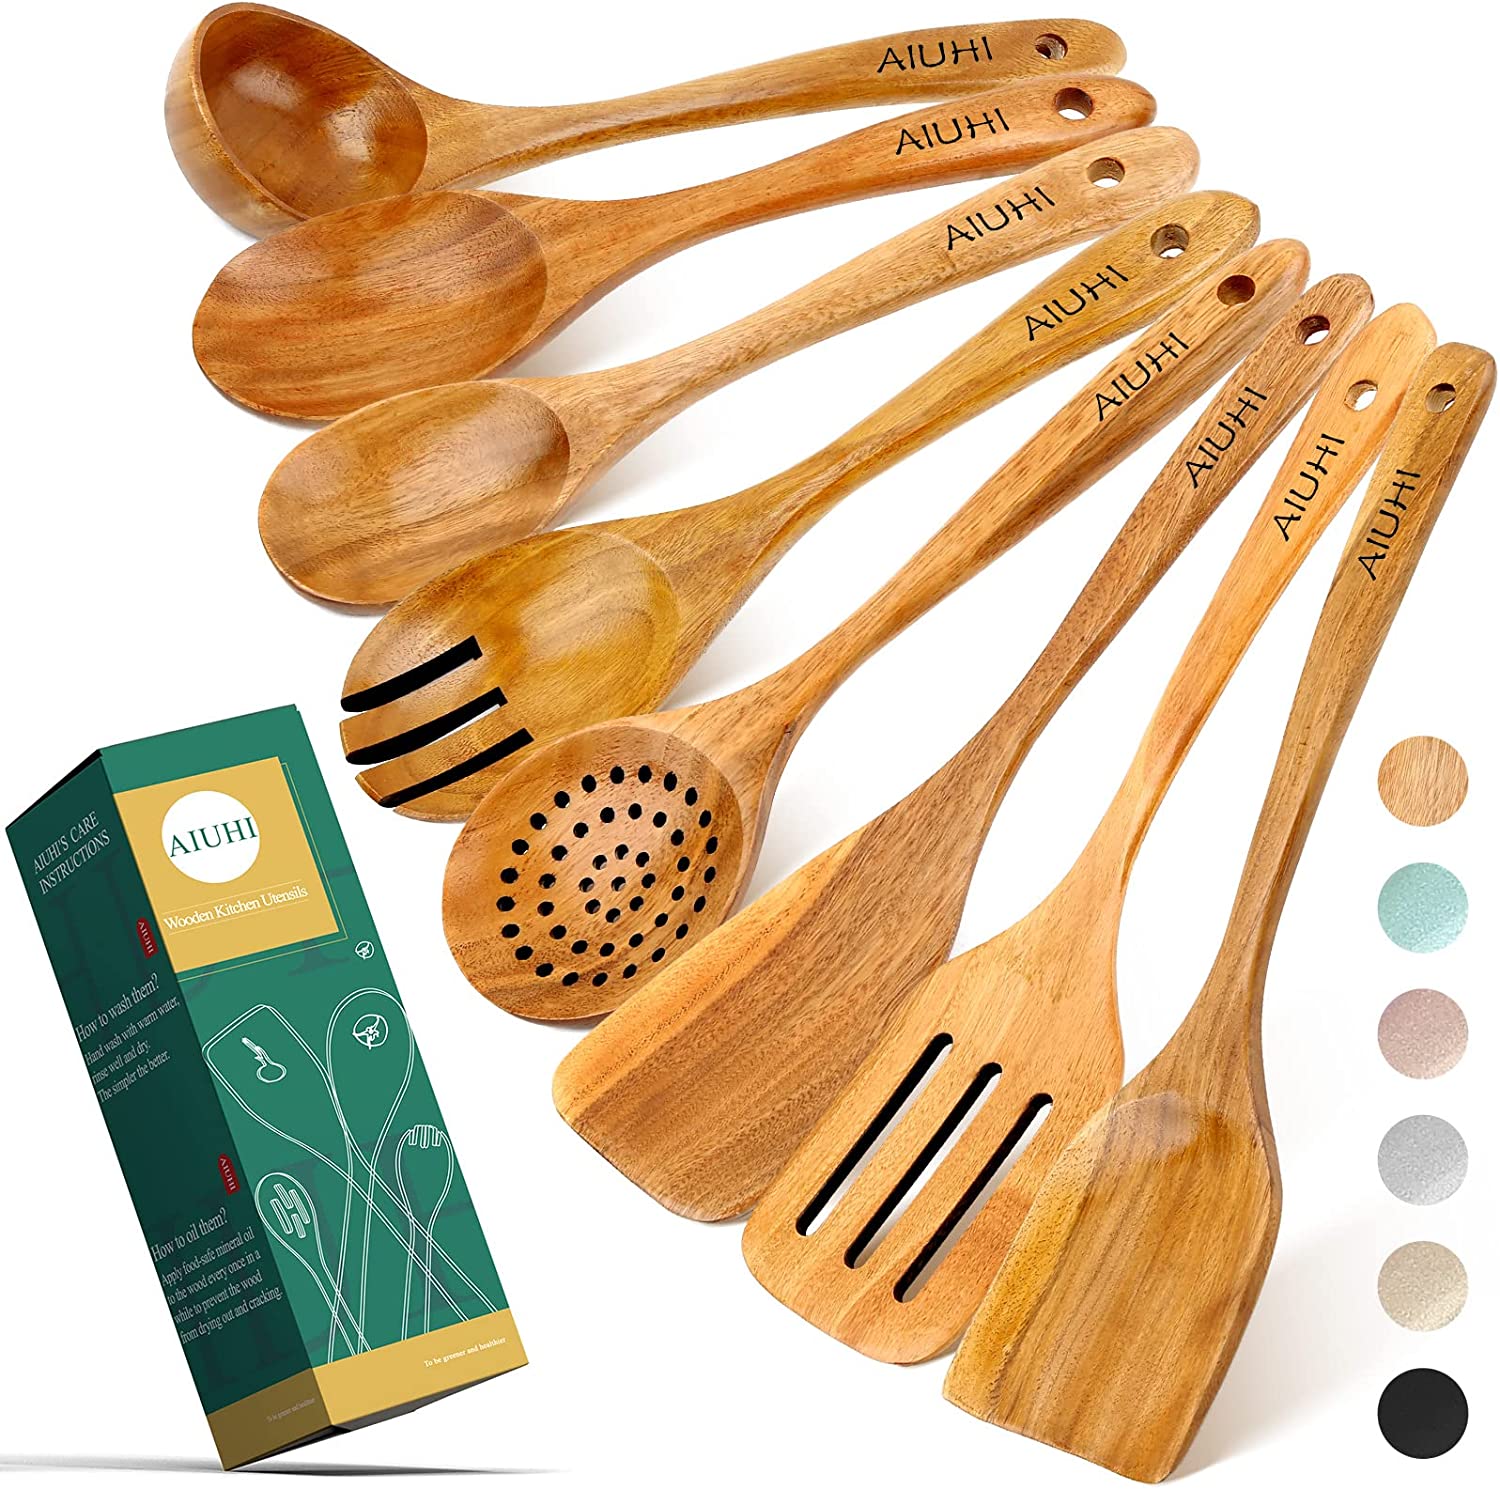 AIUHI Non-Toxic Wooden Spoon & Spoon Set, 8-Piece